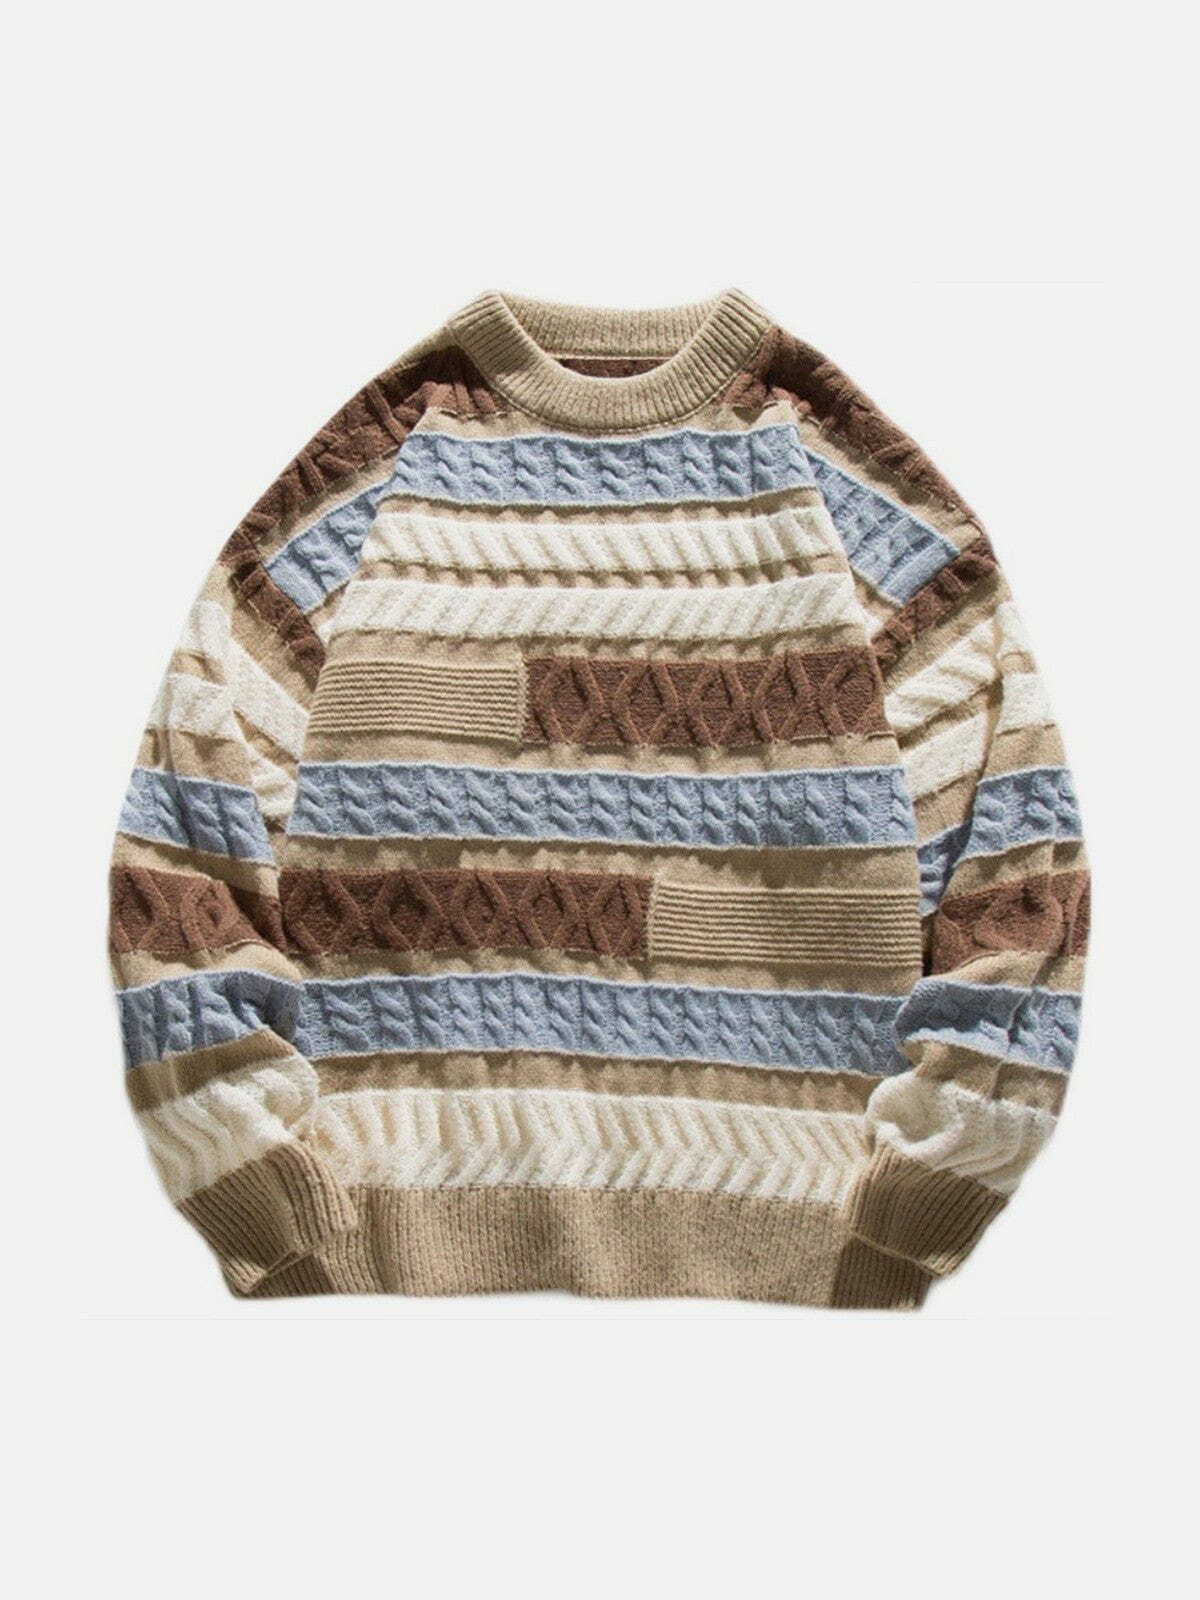 soft knit sweater retro chic statement piece 4656